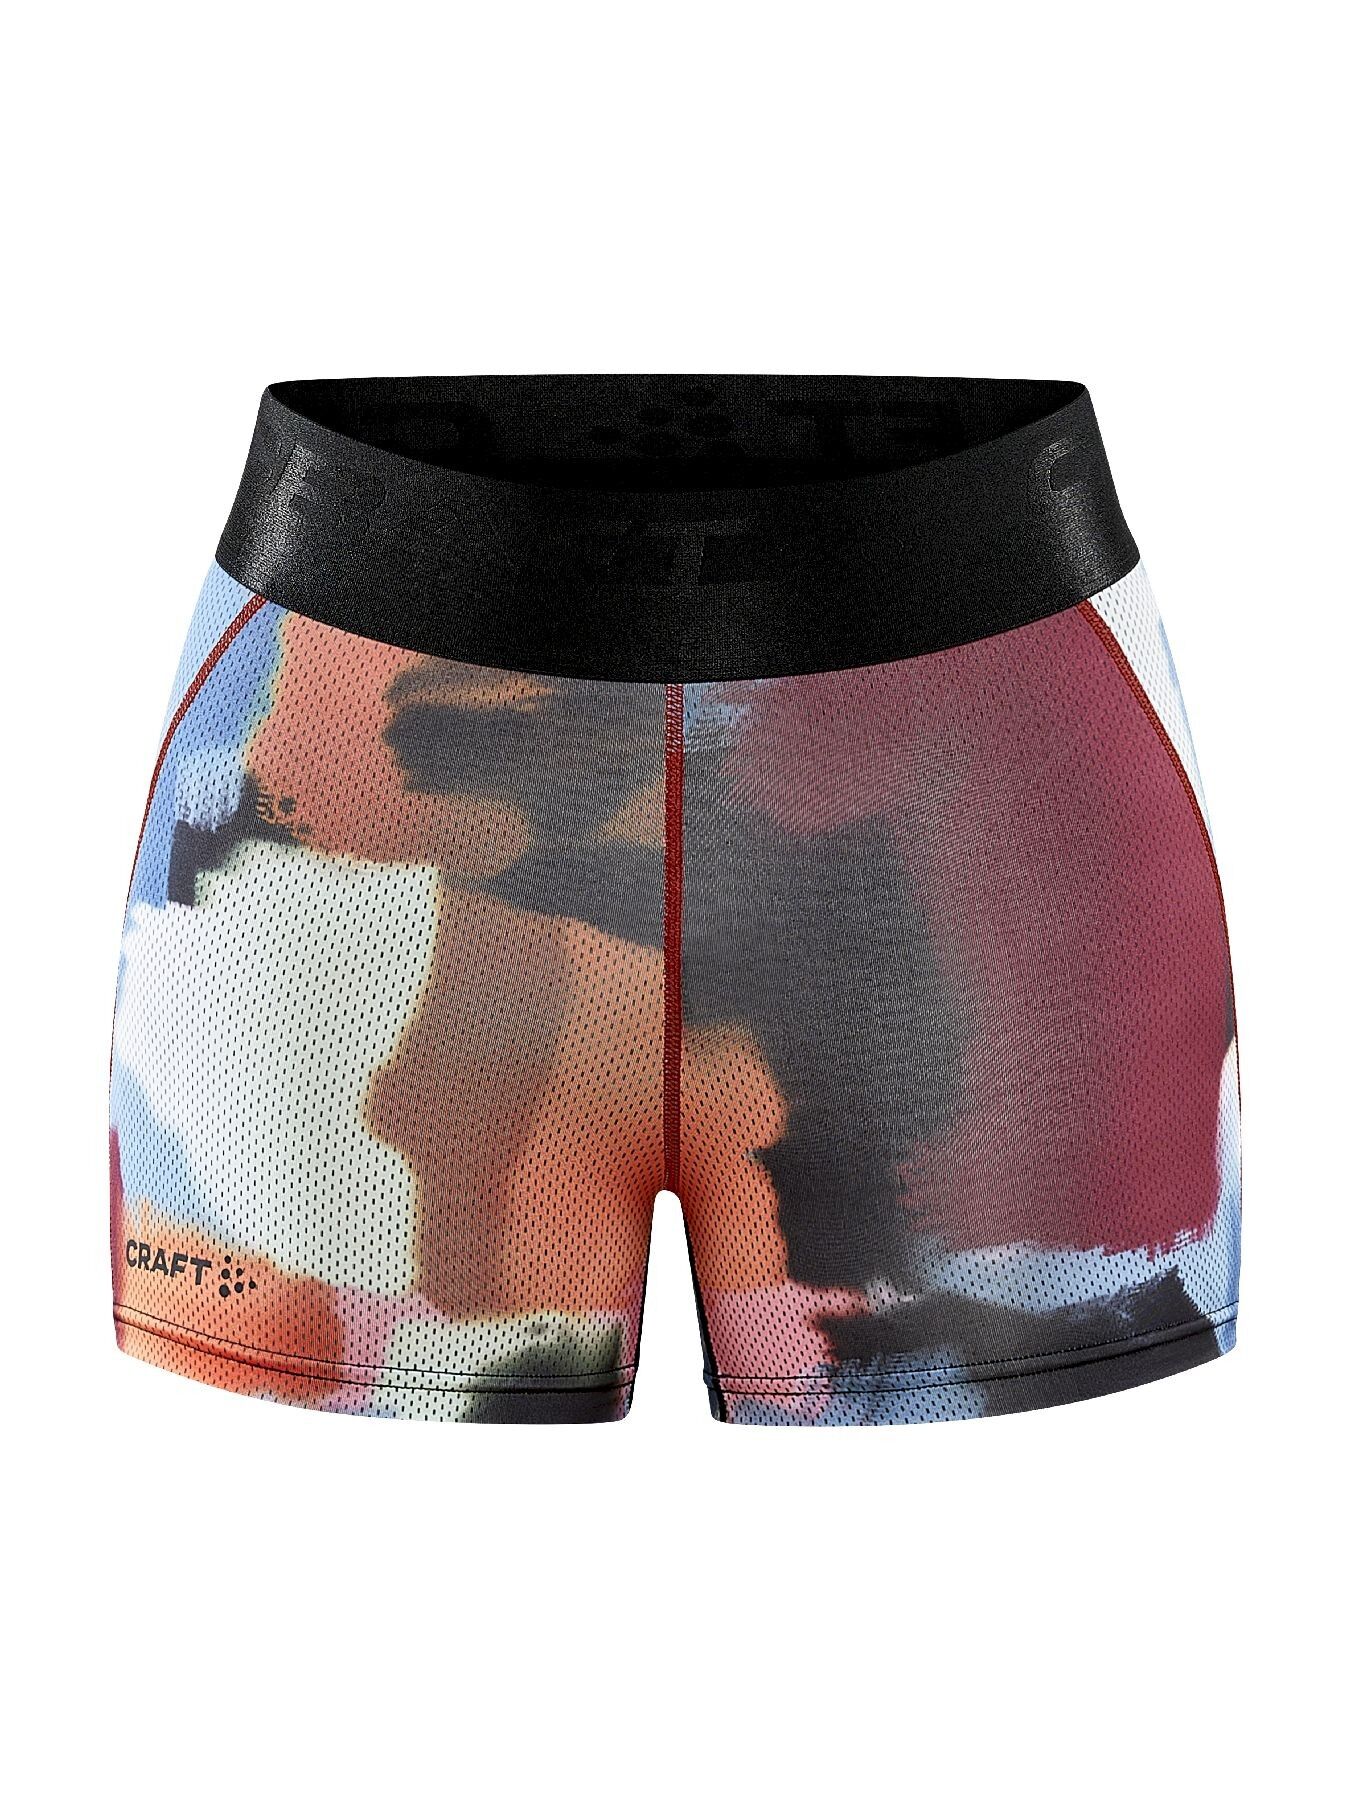 Craft Core Essence Hot Pants - Running shorts - Women's